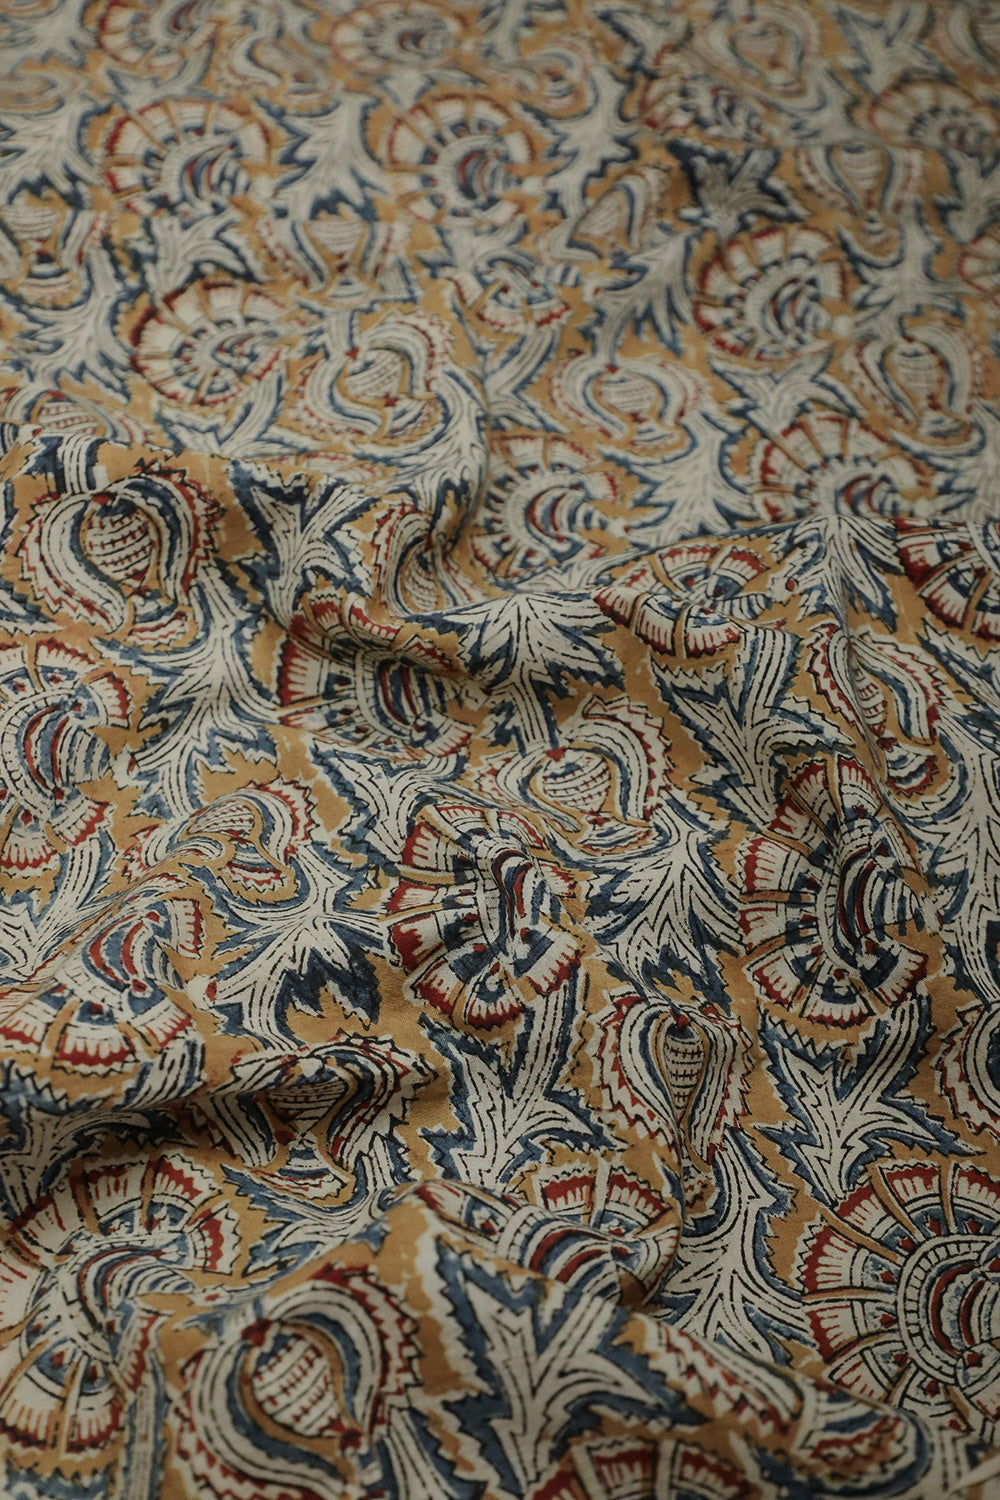 Fabric-Matkatus